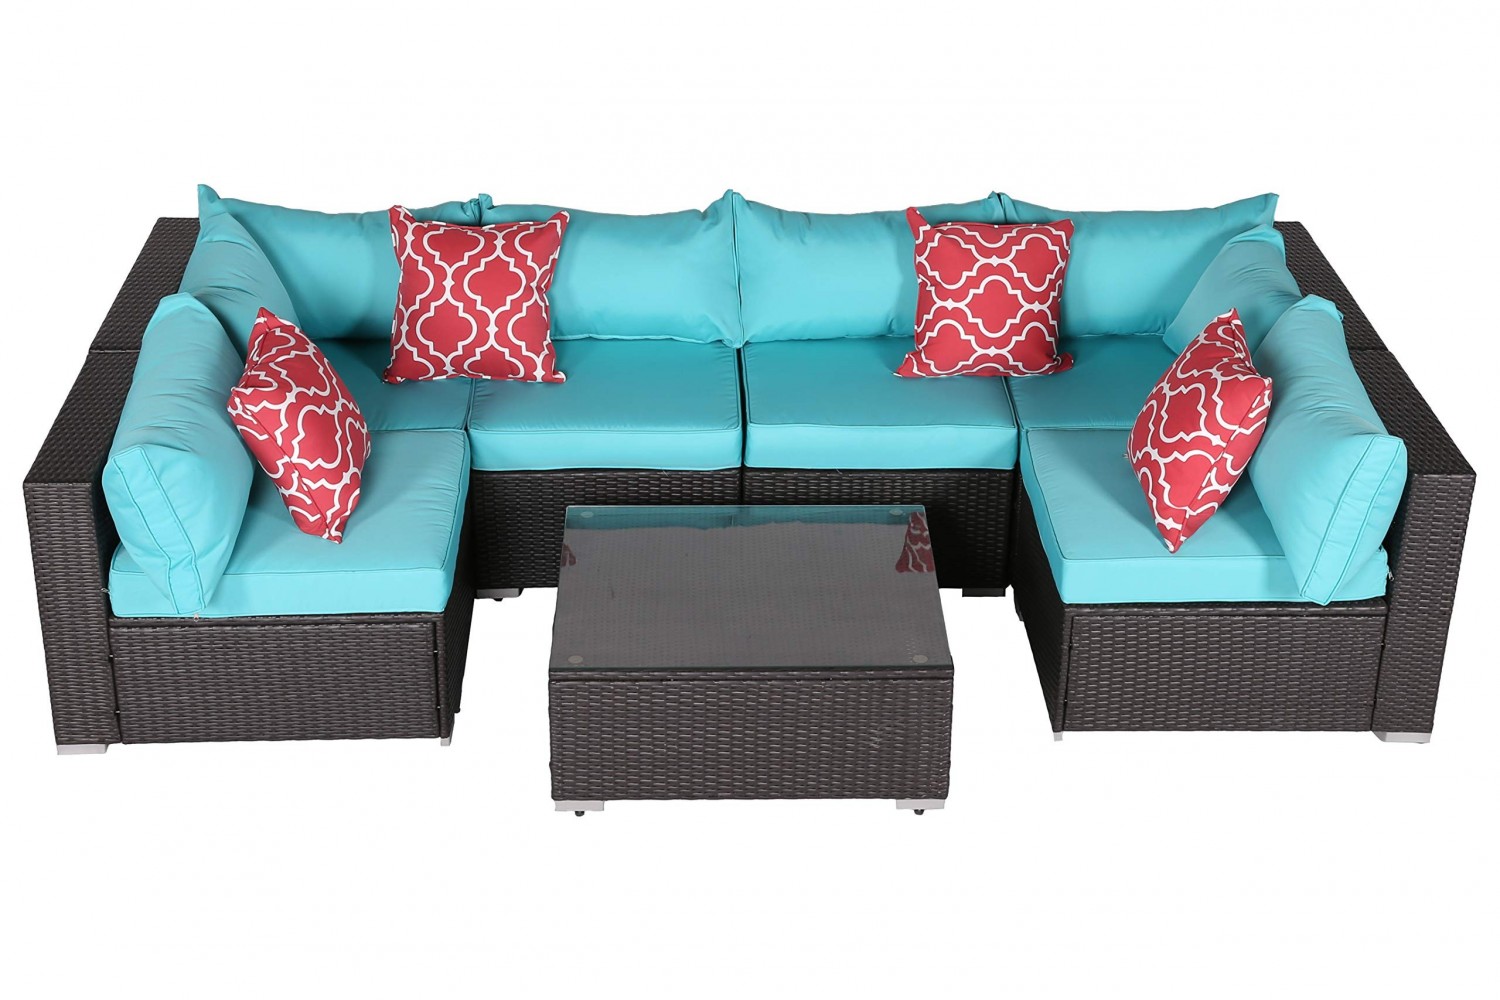 Do4U Patio Sofa 7-Piece Set Outdoor Furniture Sectional All-Weather Wicker Rattan Sofa Turquoise Seat & Back Cushions, Garden